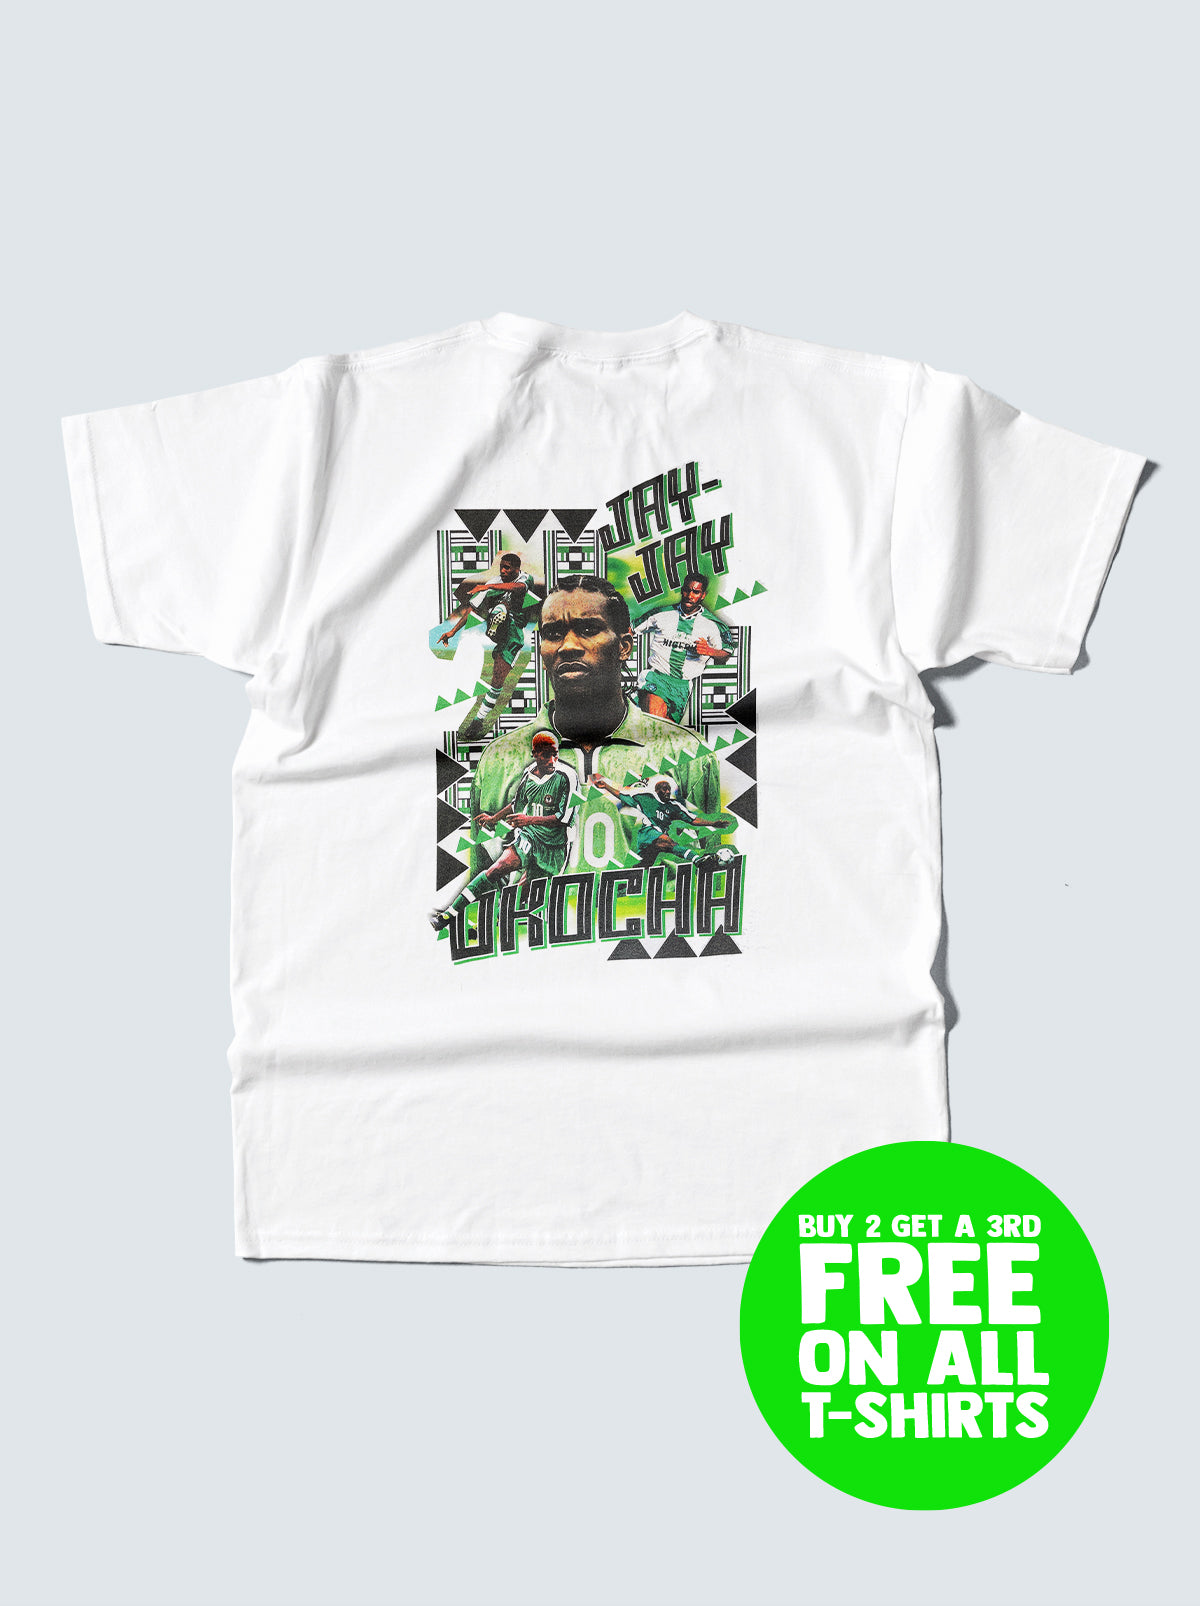 John Obi Mikel's classic Nigeria shirt